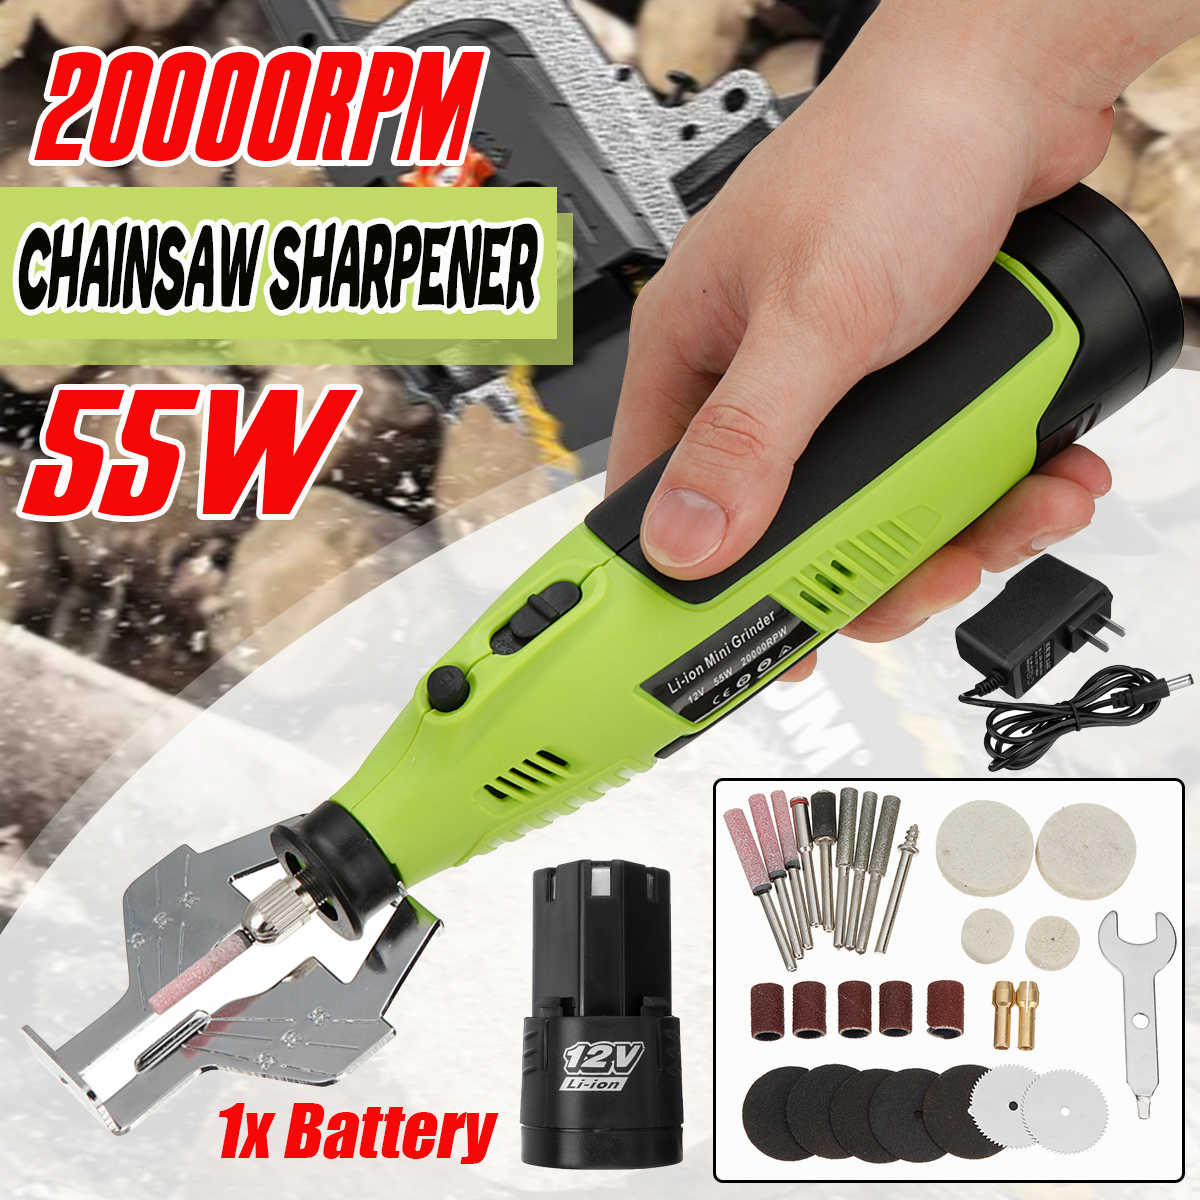 55W-20000rpm-Power-Grinder-Chain-Saw-Sharpener-Handheld-Electric-Chain-Machine-W-1-or-2pcs-Battery-1816032-2